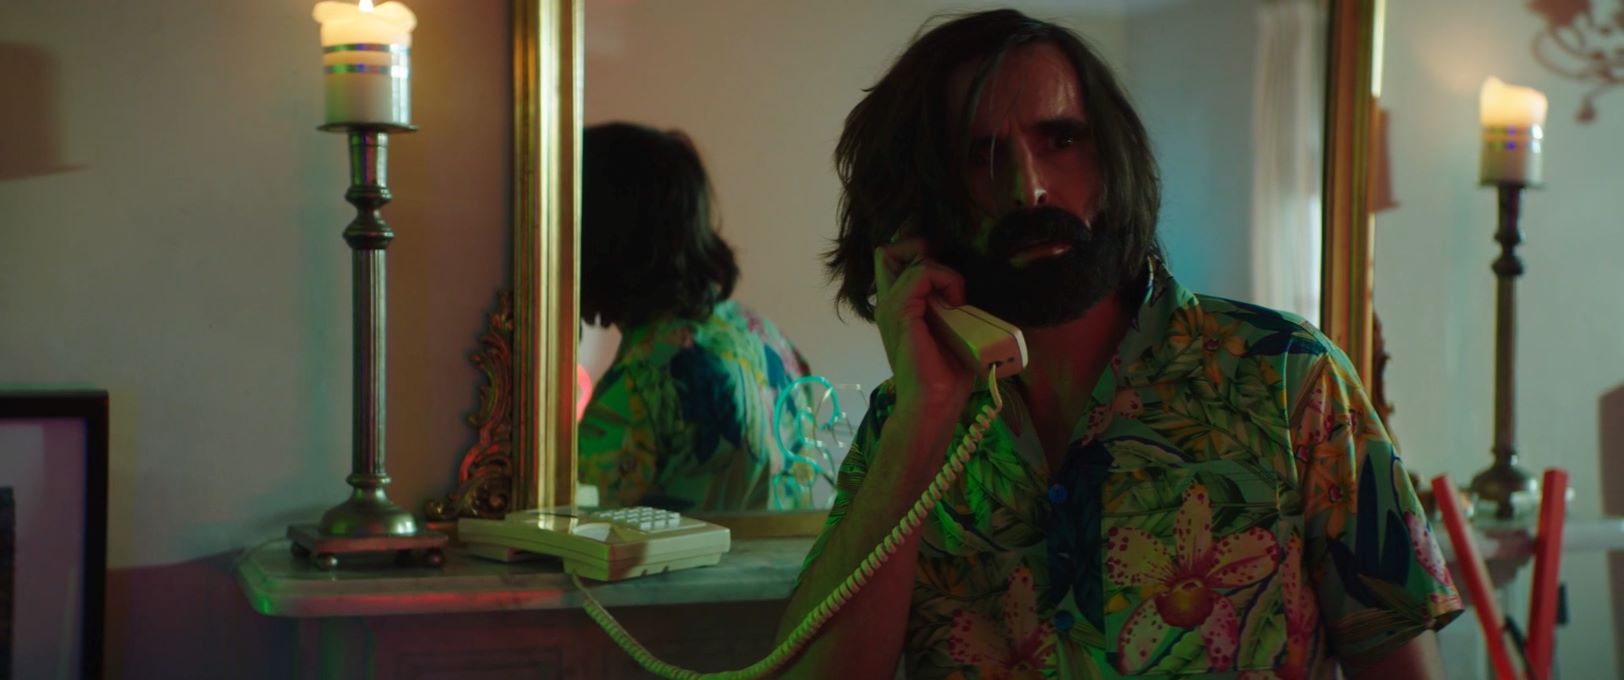 Joe Honson on the phone looks surprised in a hawaiian shirt